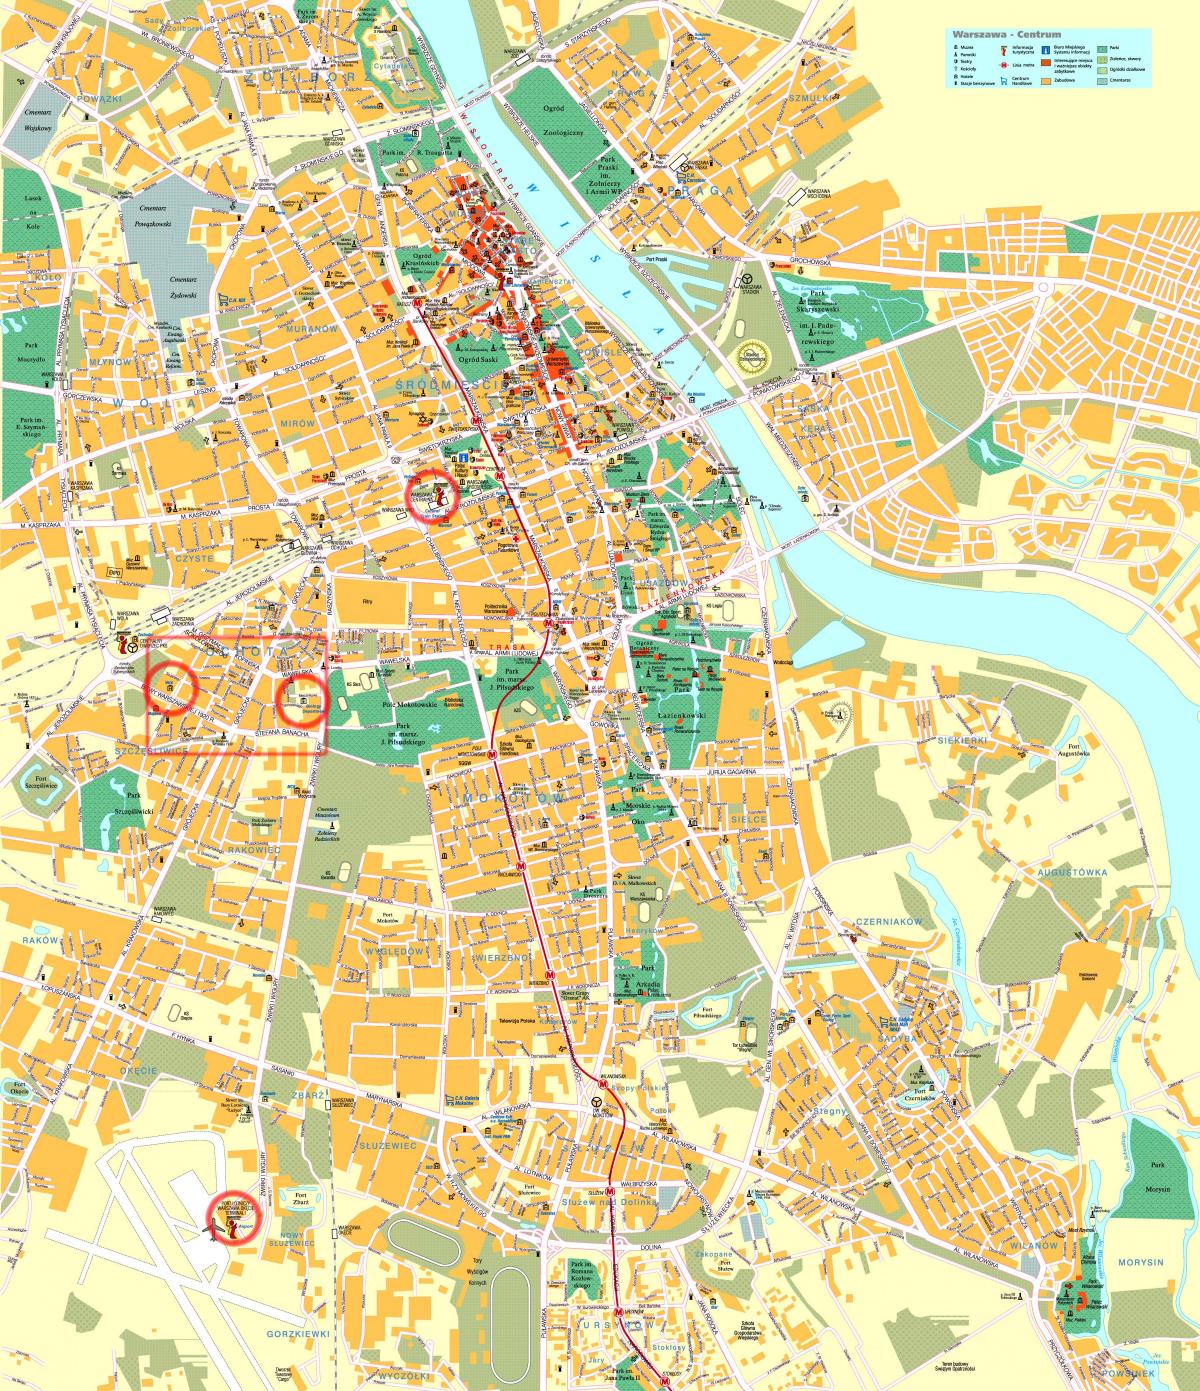 kale-mapa Varsoviako hirian zentroa